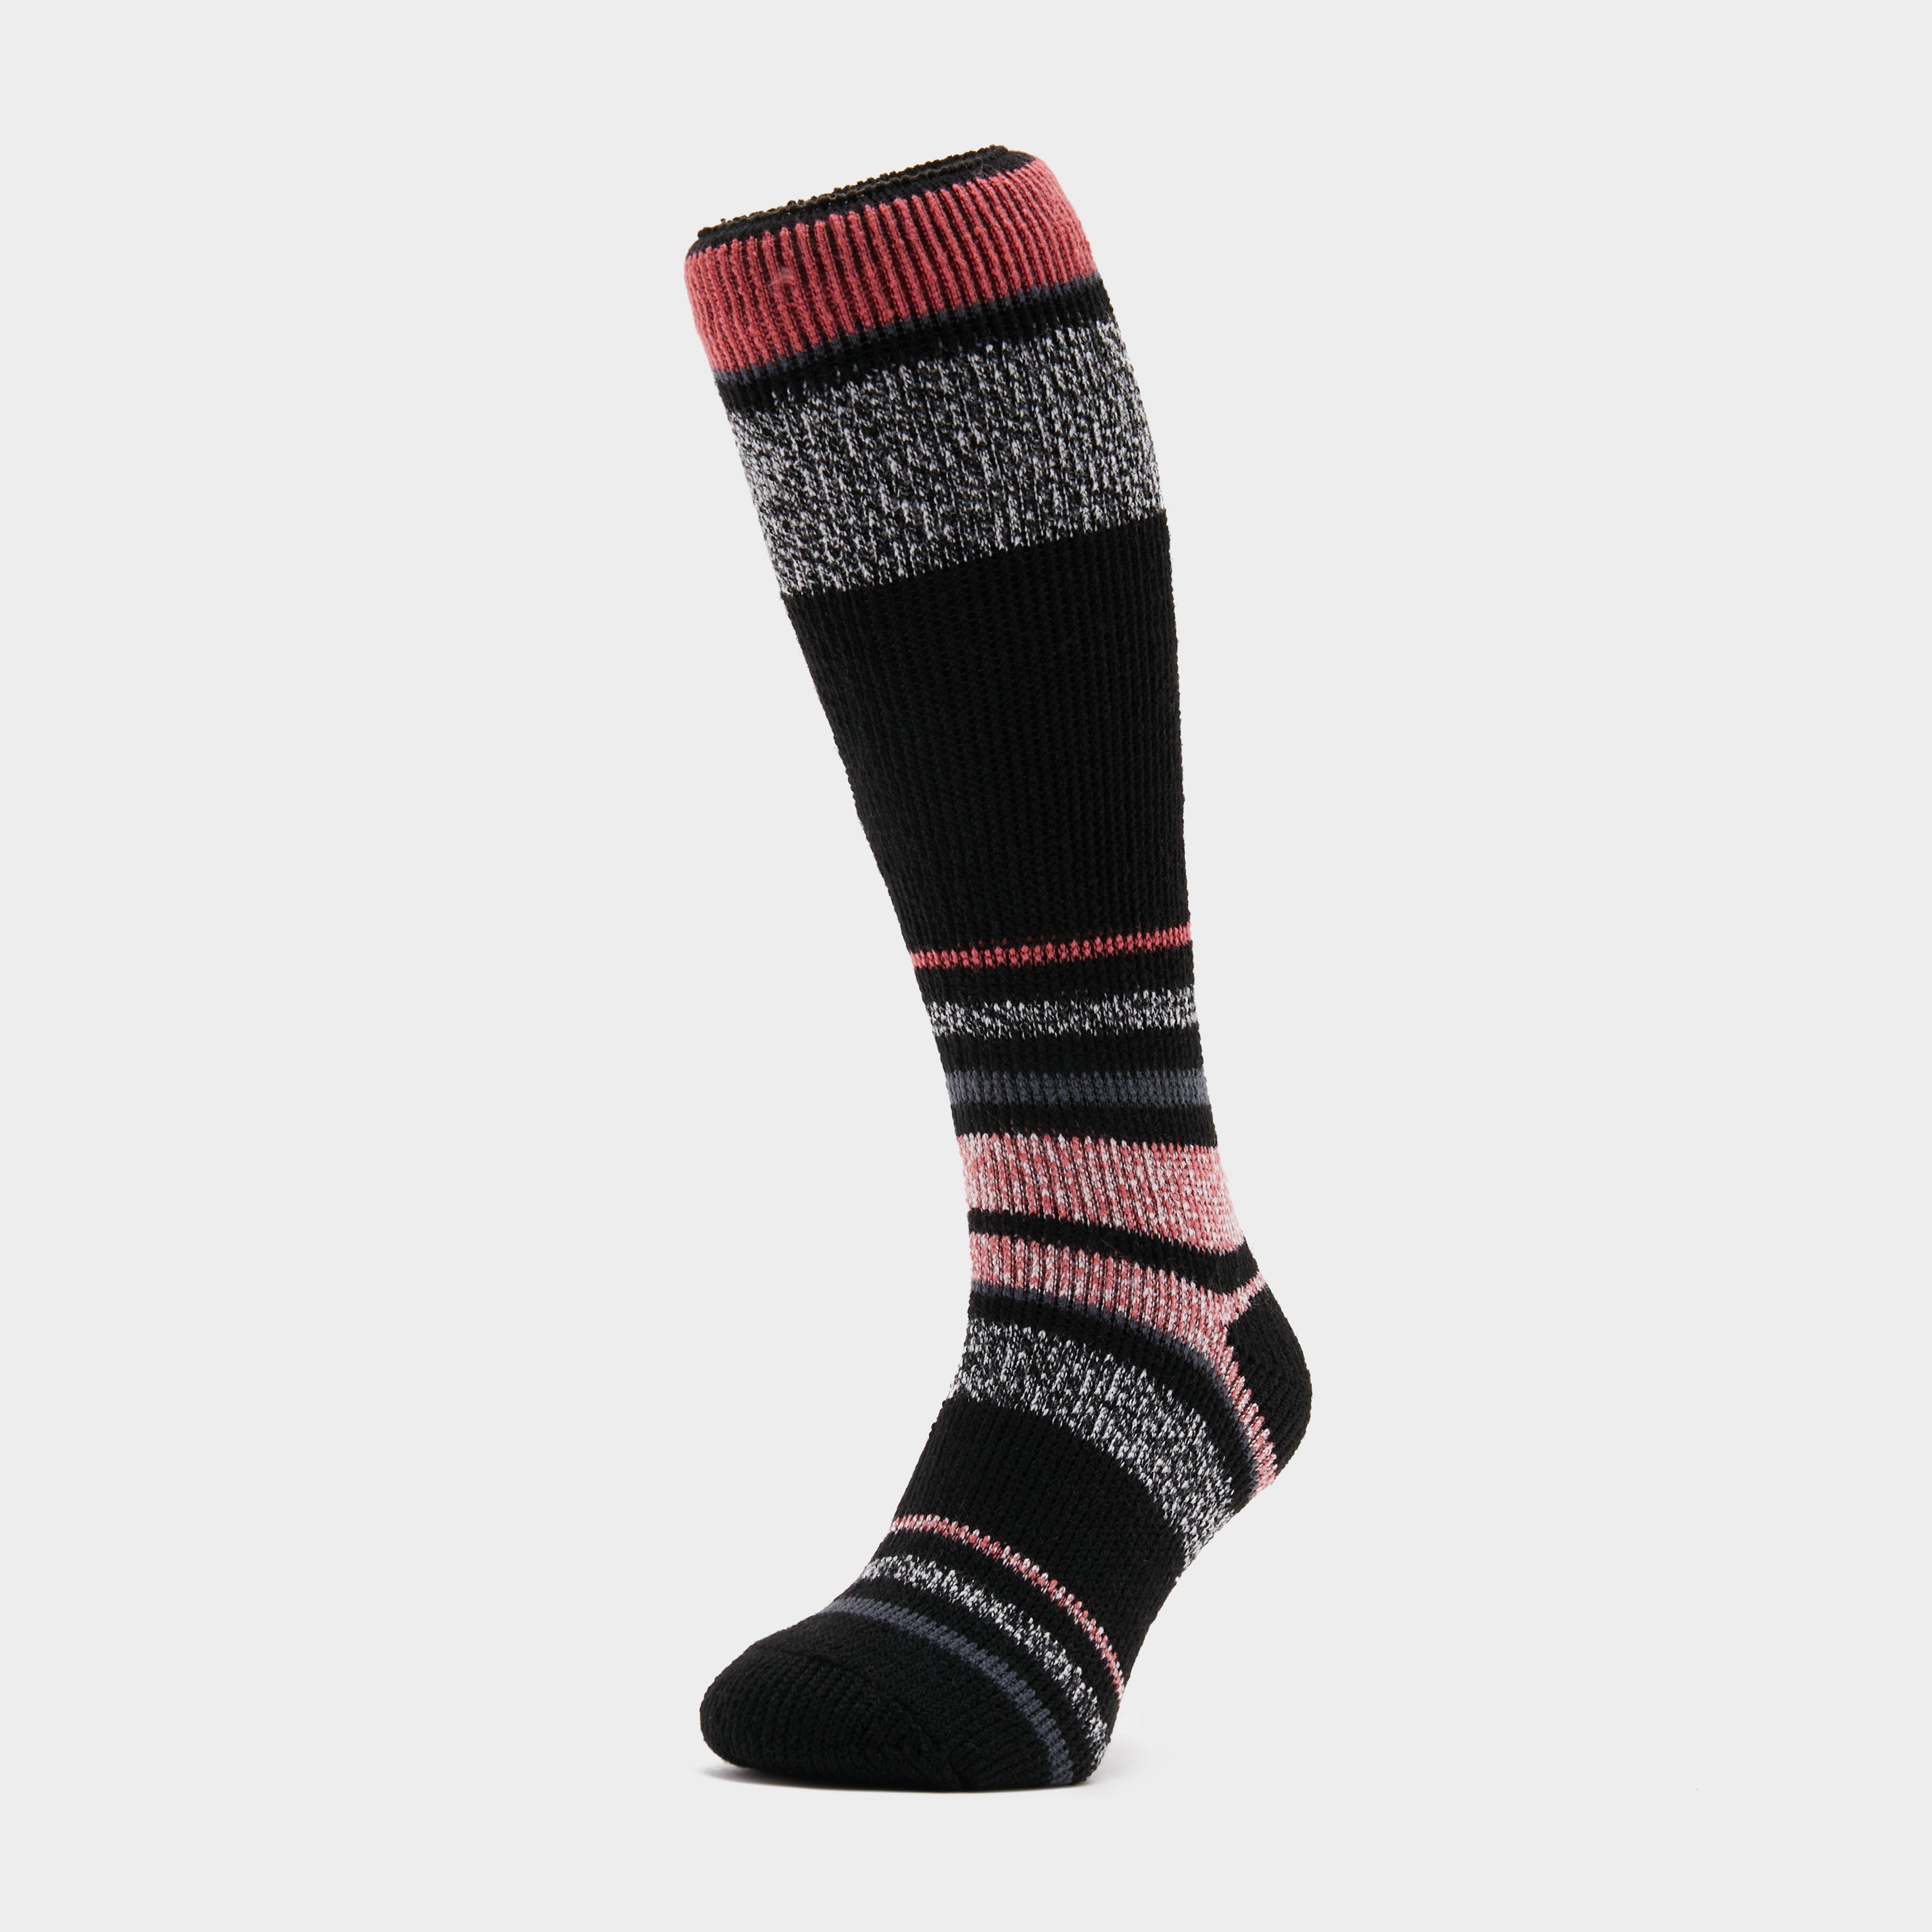 The Edge Men's Hakuba Comfort Socks Review